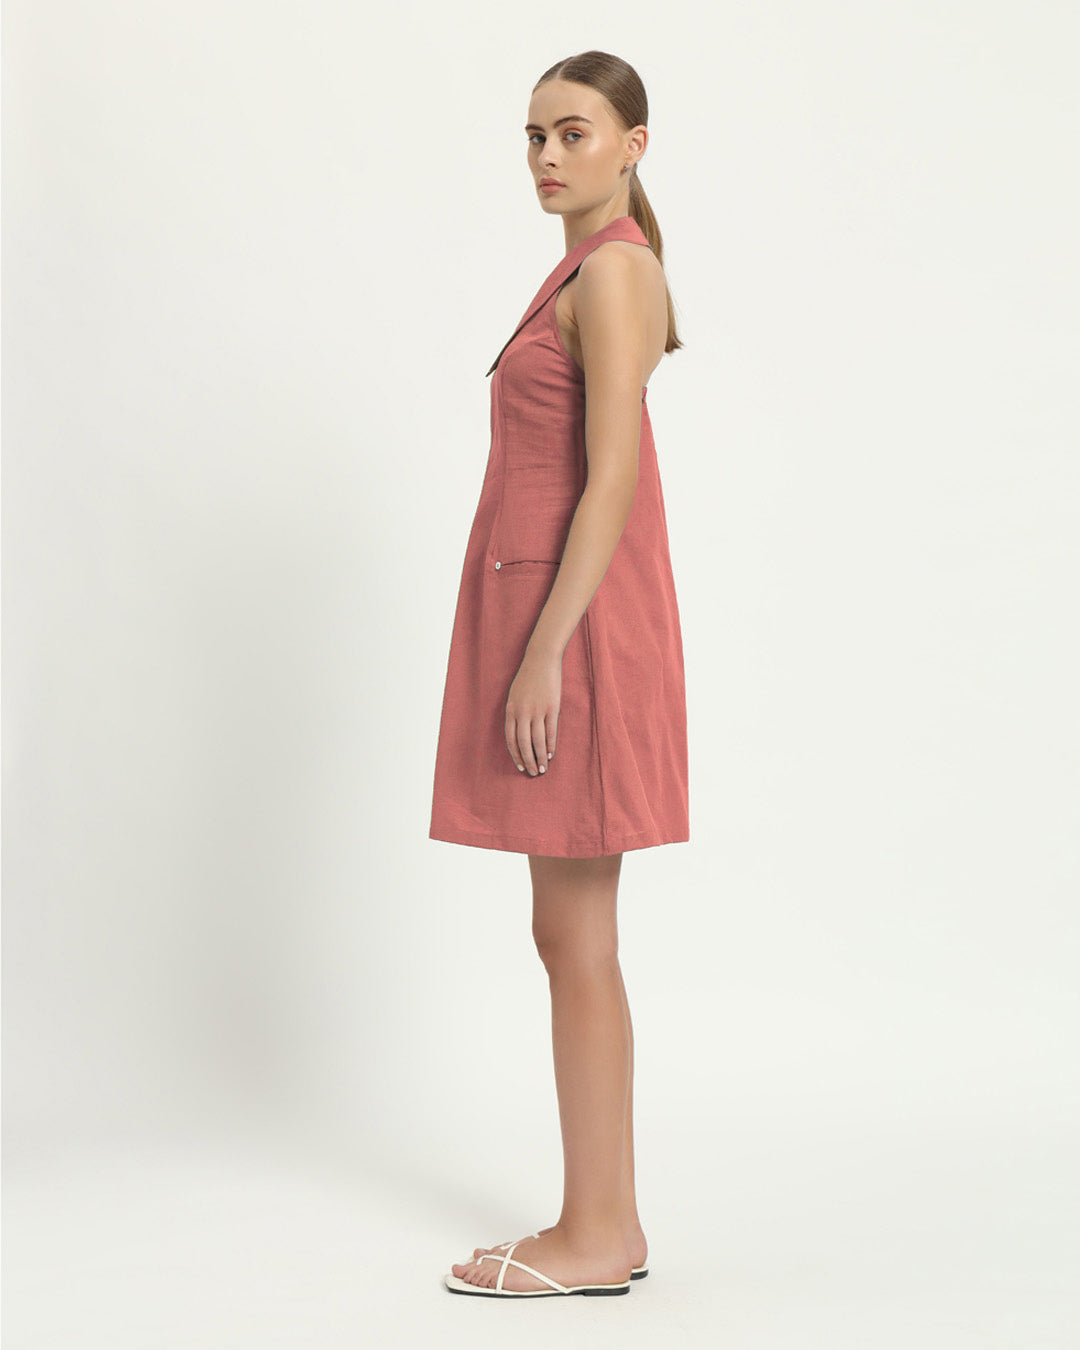 The Olfen Ivory Pink Cotton Dress